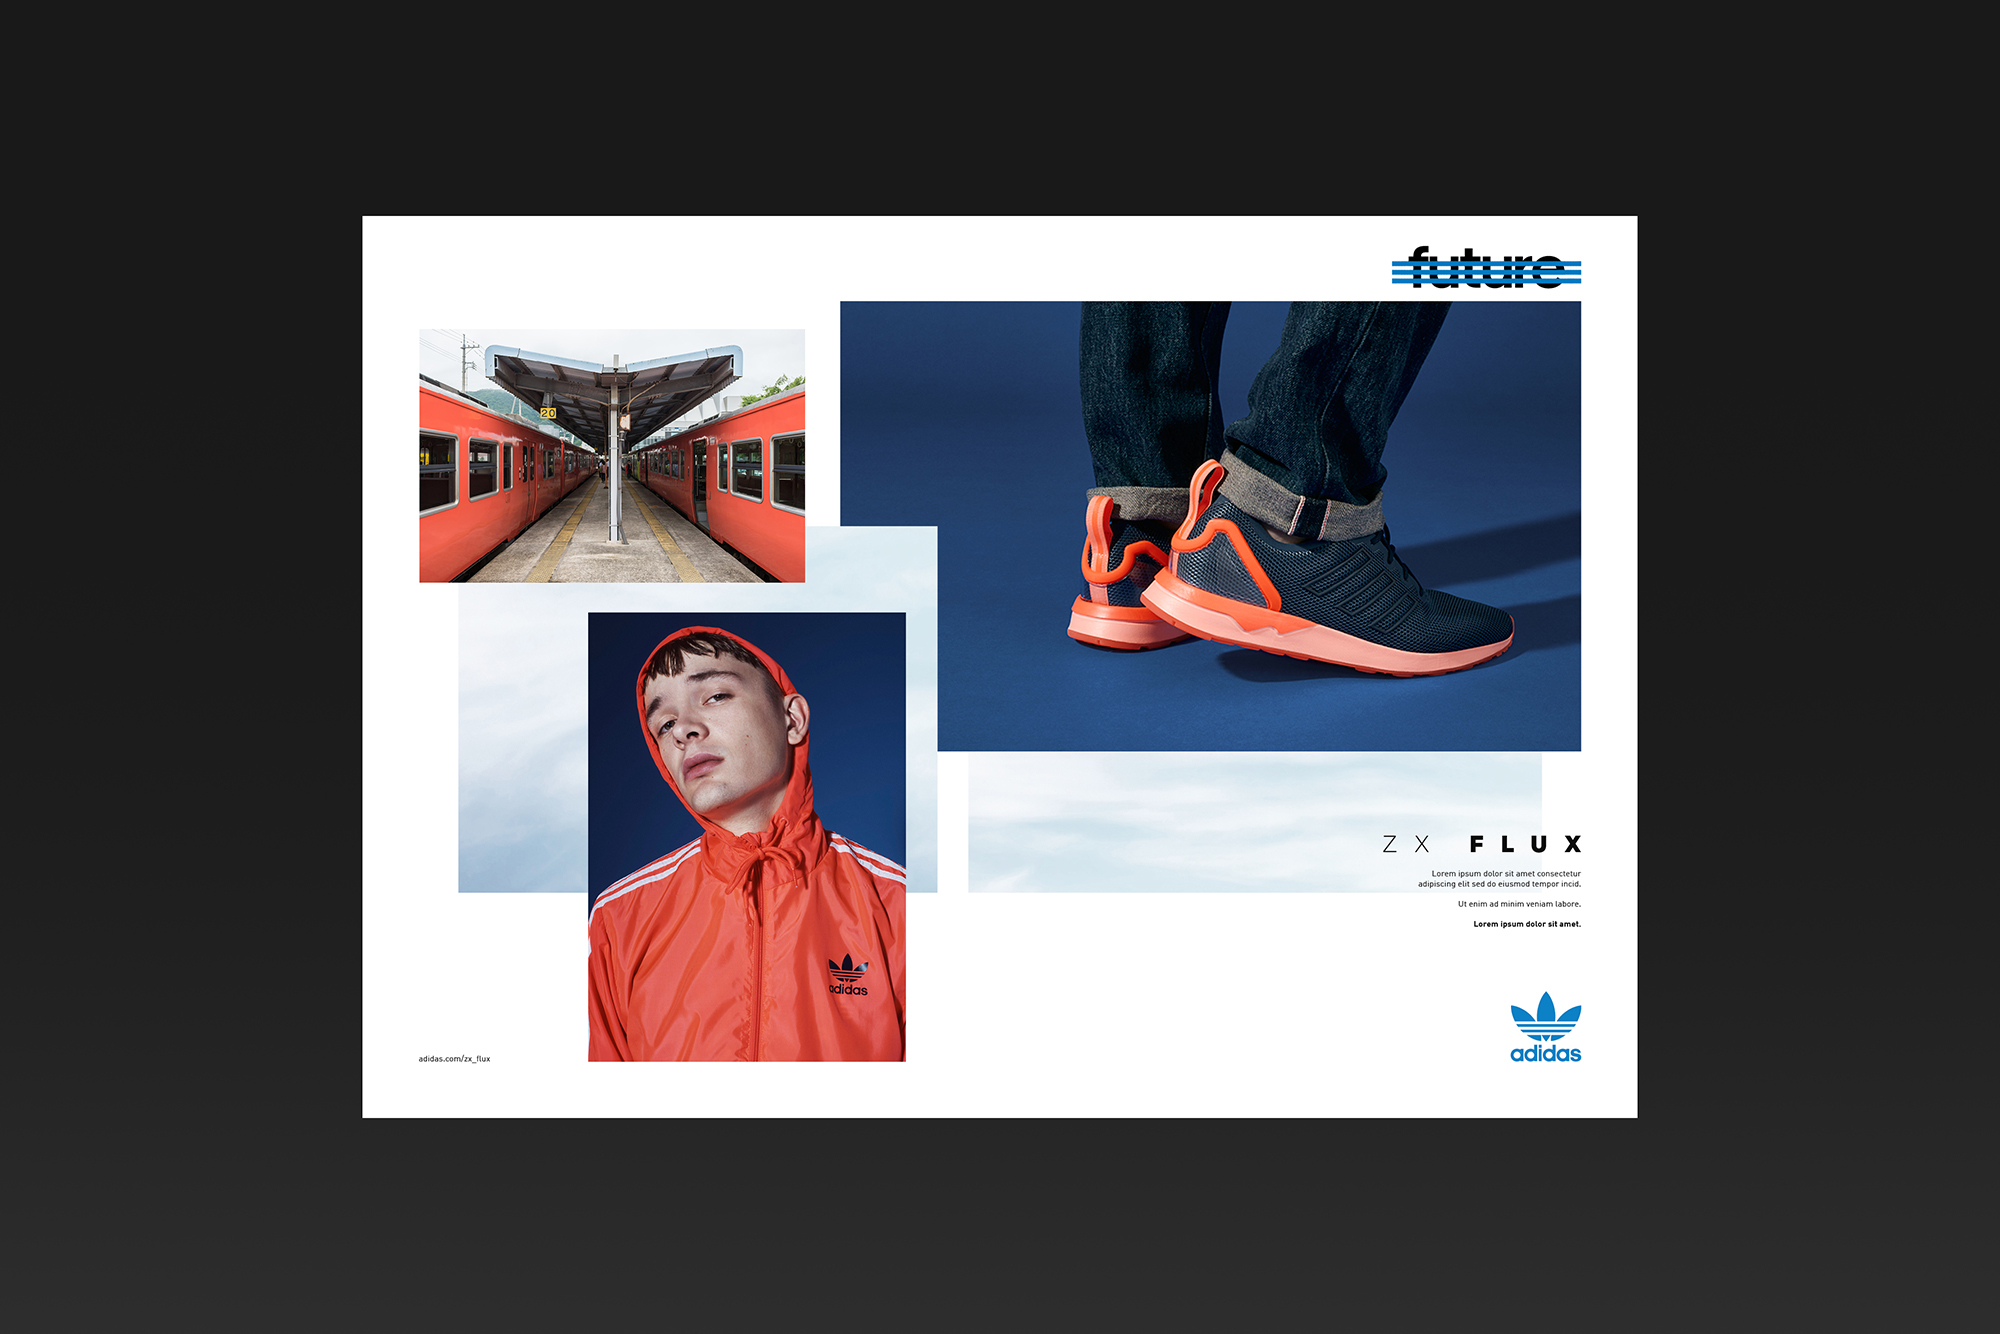 Adidas_SS16_Examples_02.jpg